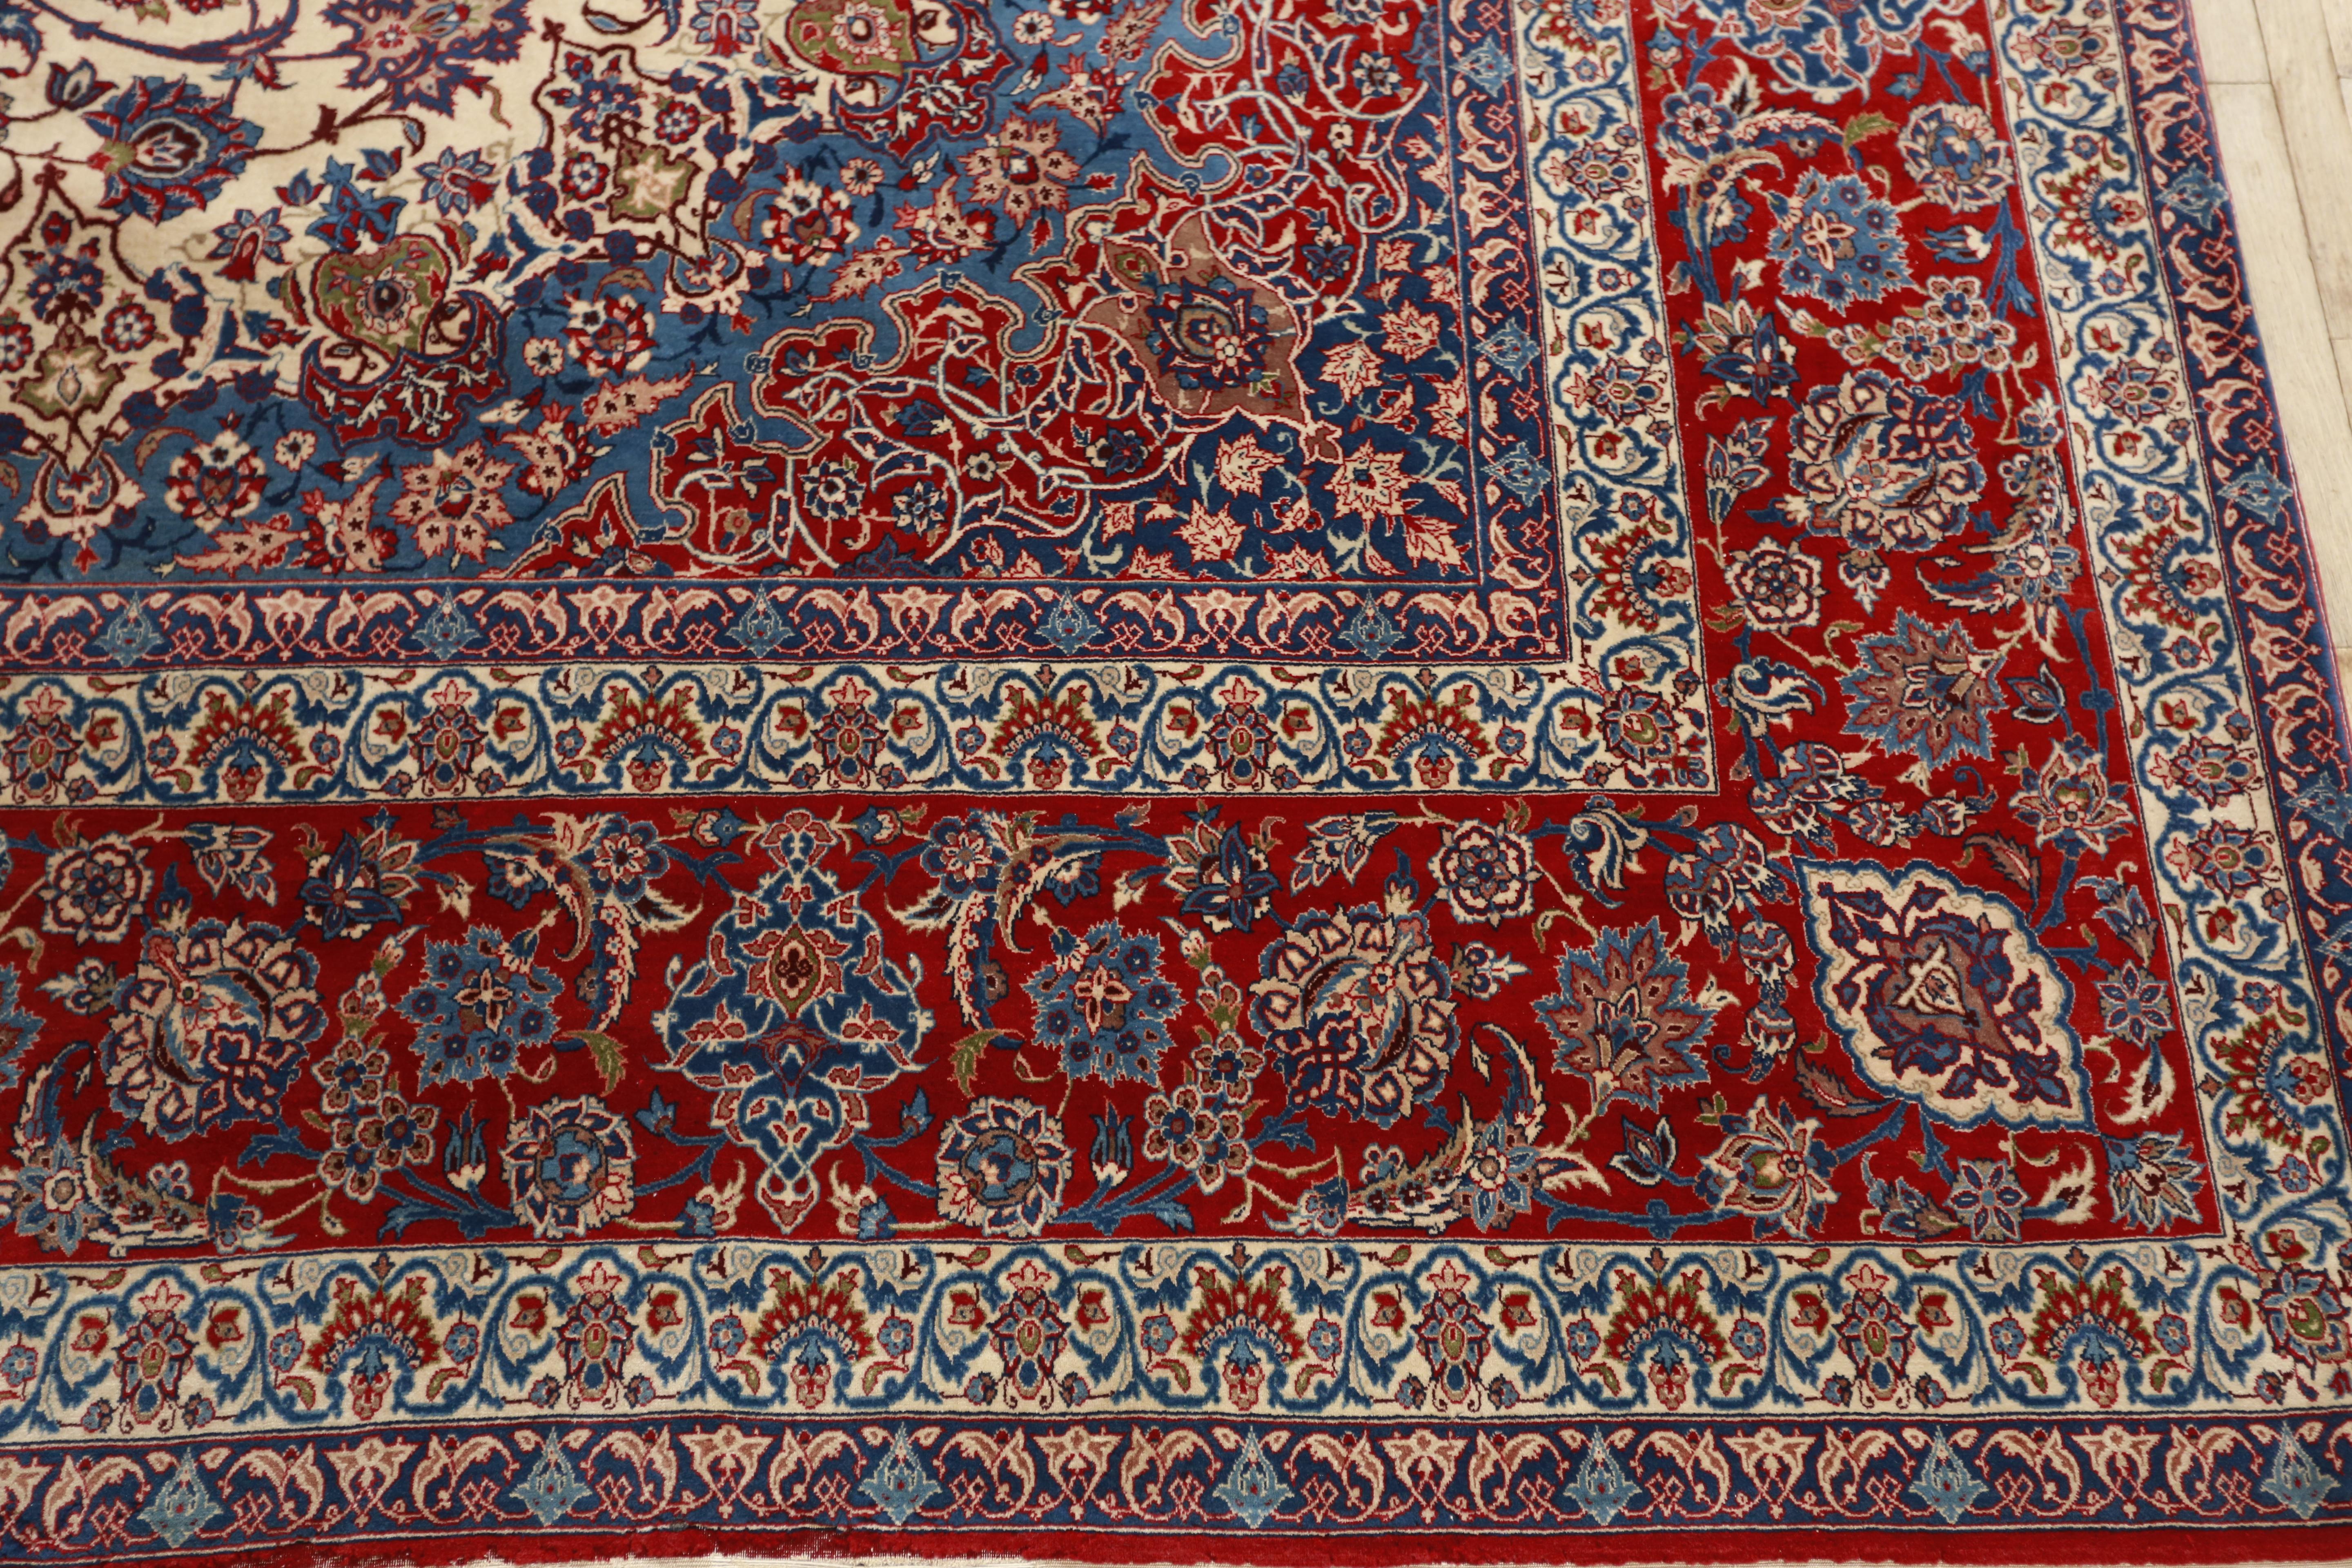 Isfahan Persian carpet 400 X 260 cm million knots per m2 For Sale 2